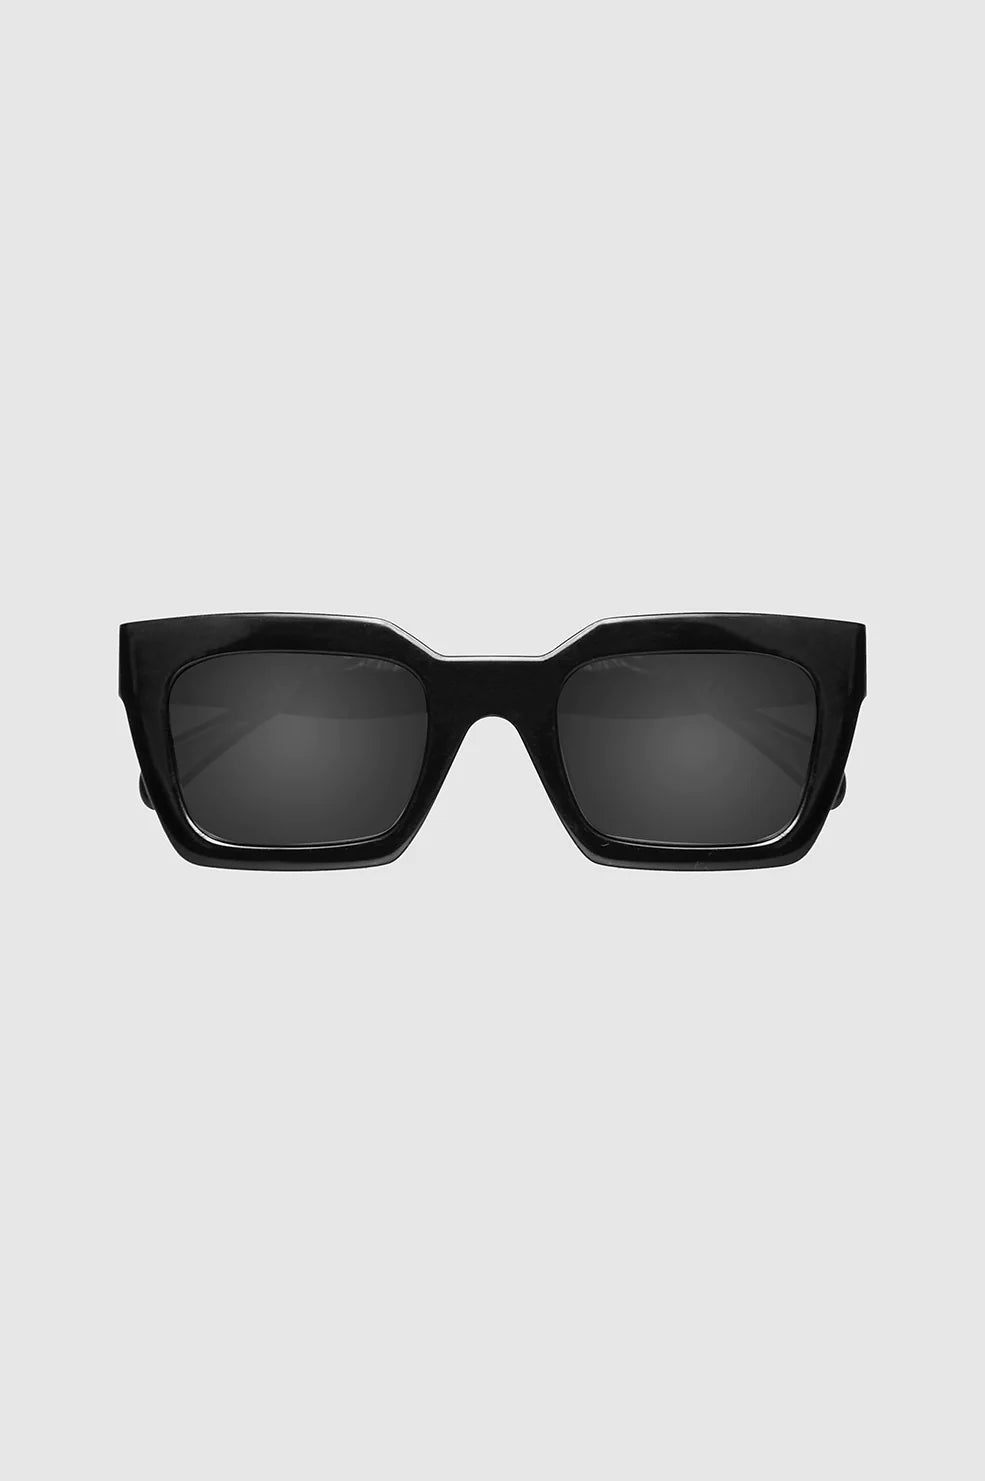 Anine Bing - Indio Black Sunglasses